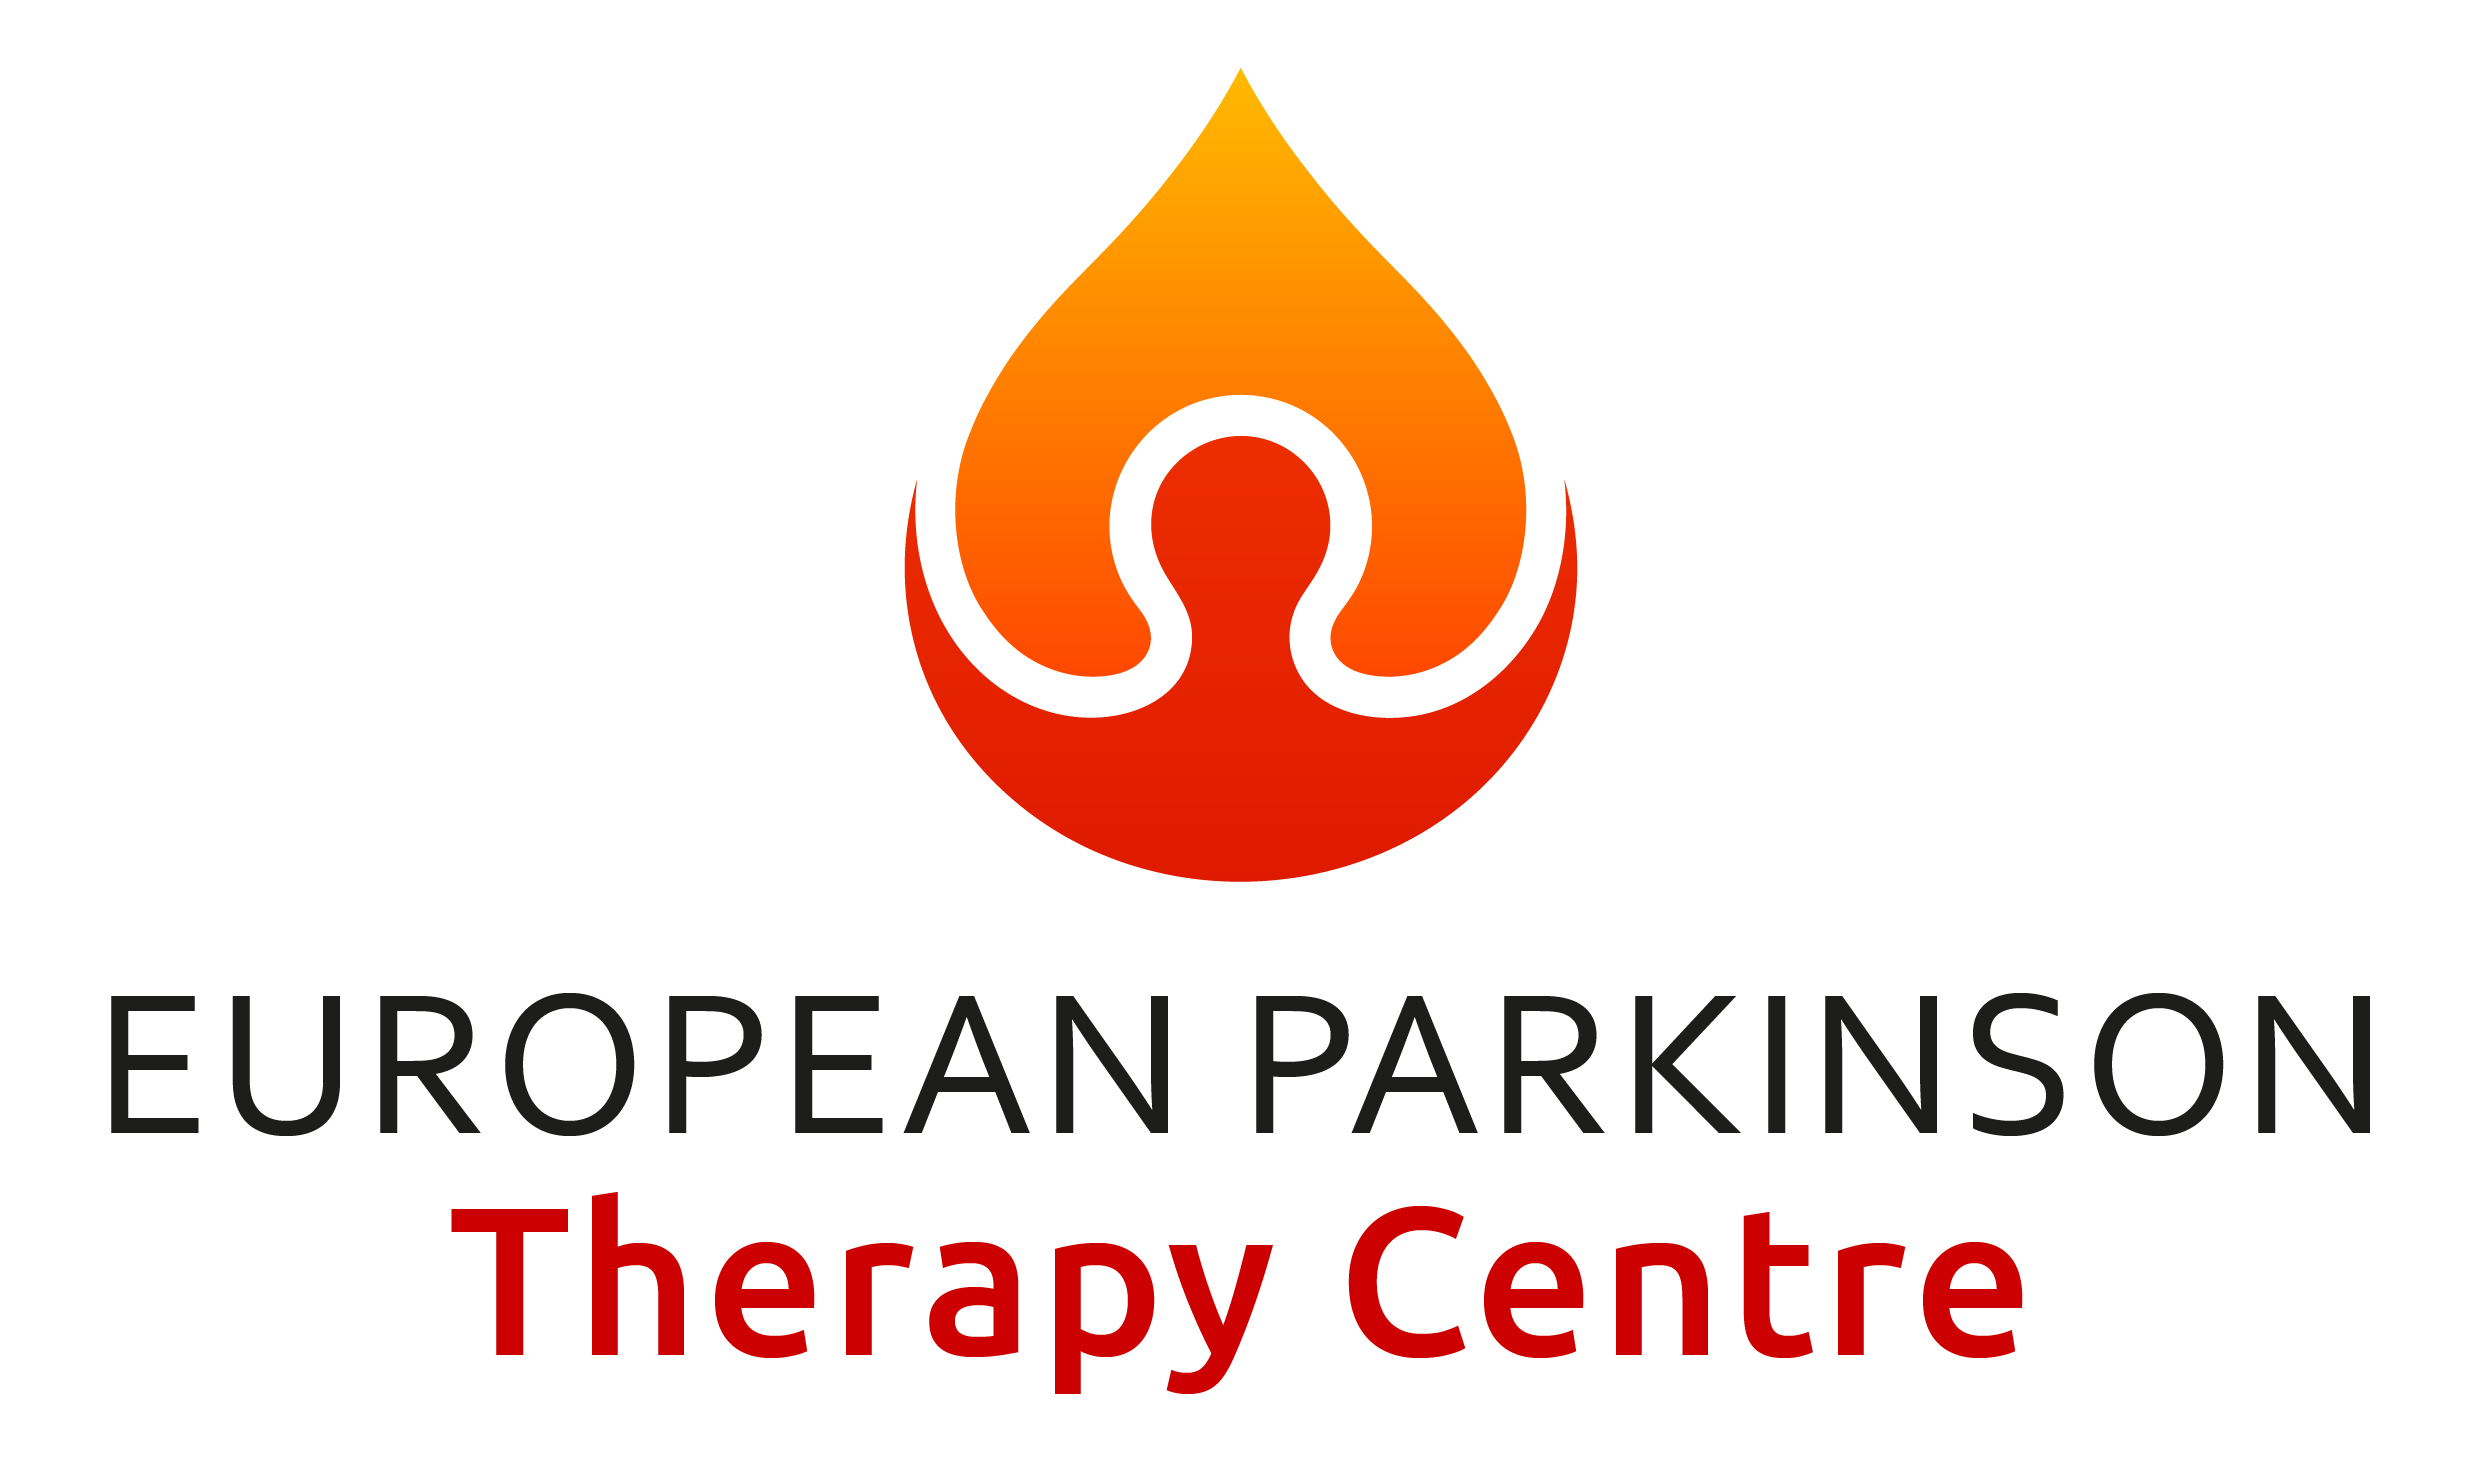 European Parkinson Therapy Centre